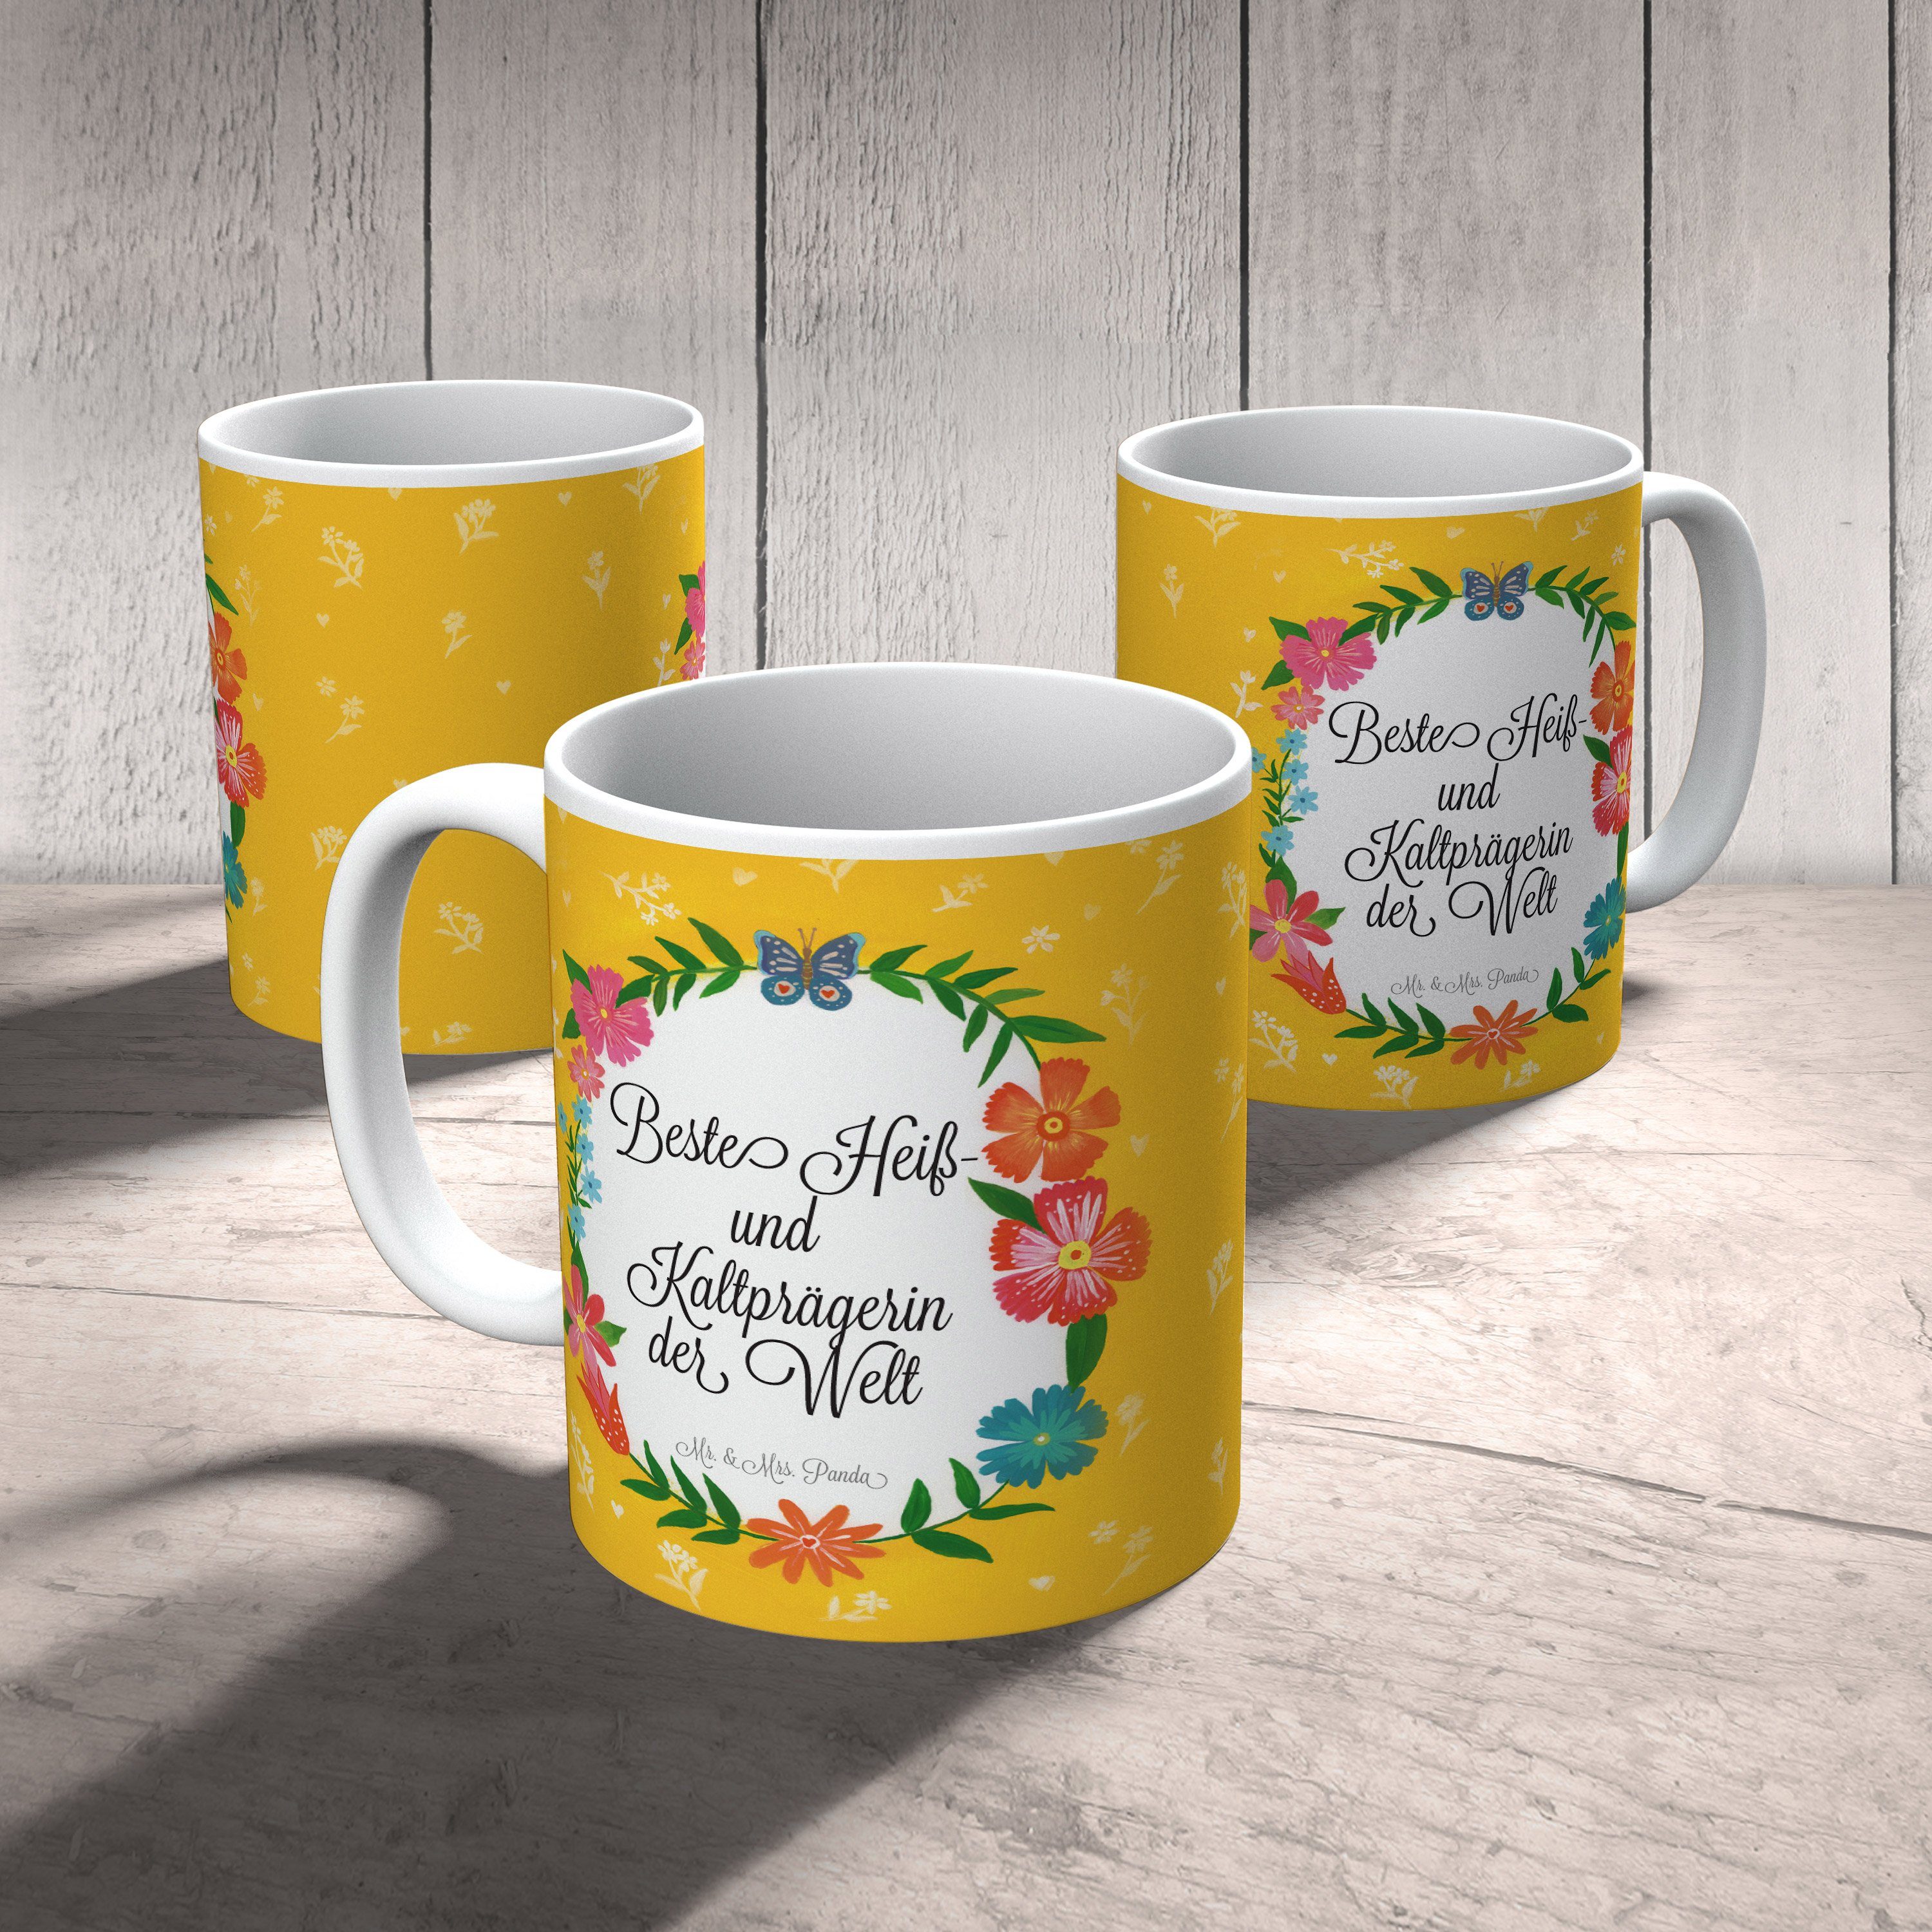 Mr. & Mrs. Panda Tasse Geschenk, Kaffeetasse, Abschluss, und Heiß- - Bachelor, Kaltprägerin Keramik